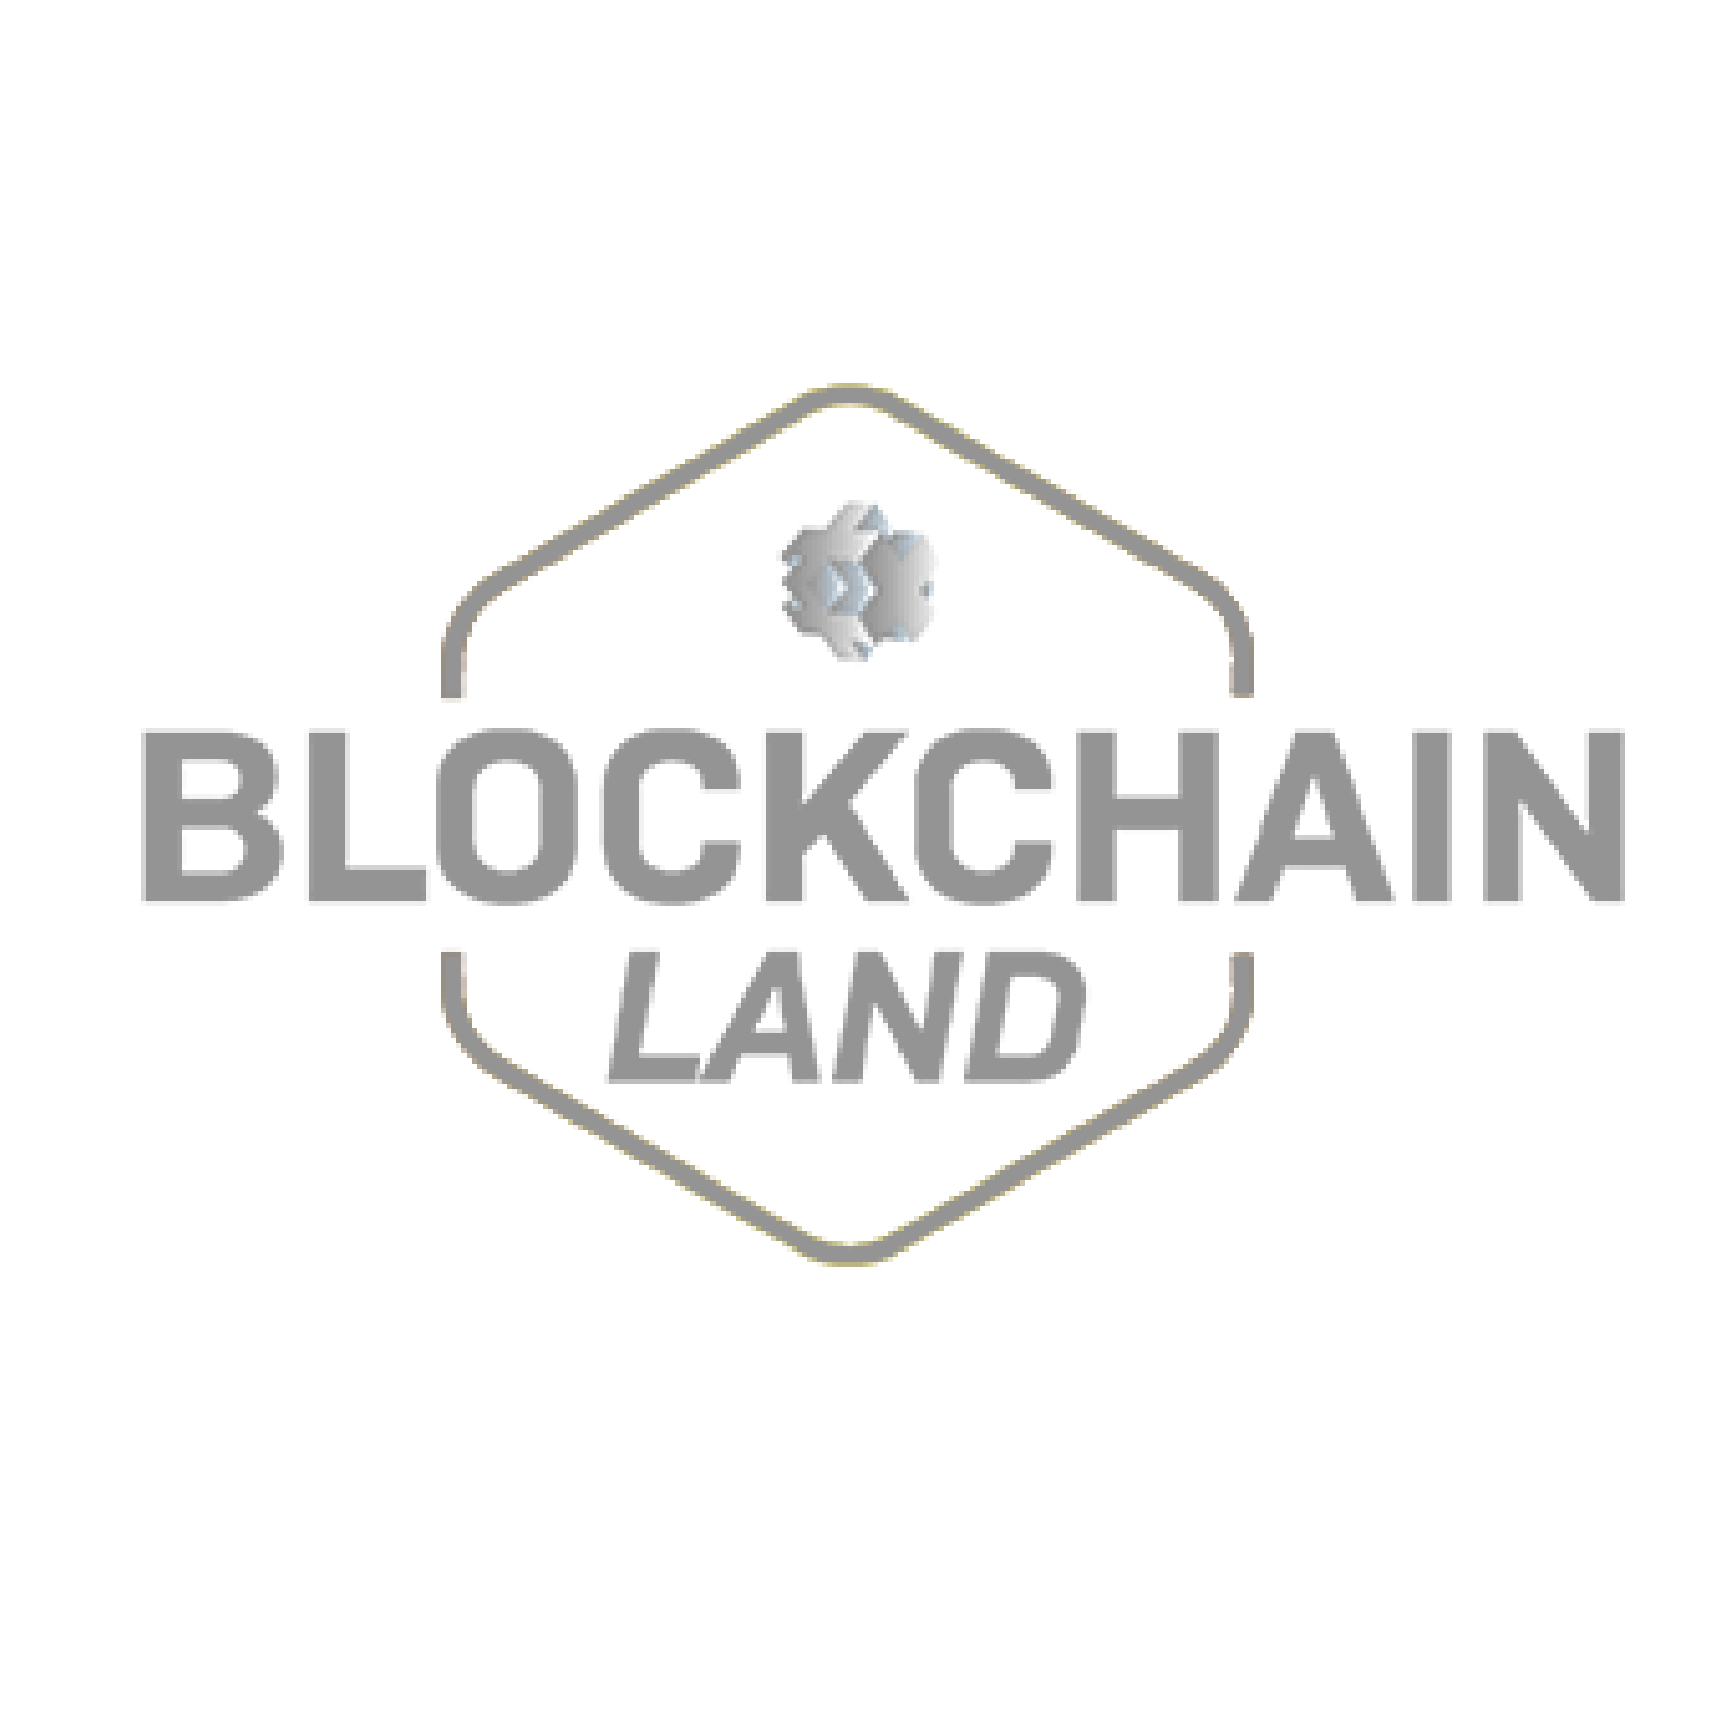 Blockchainland logo
